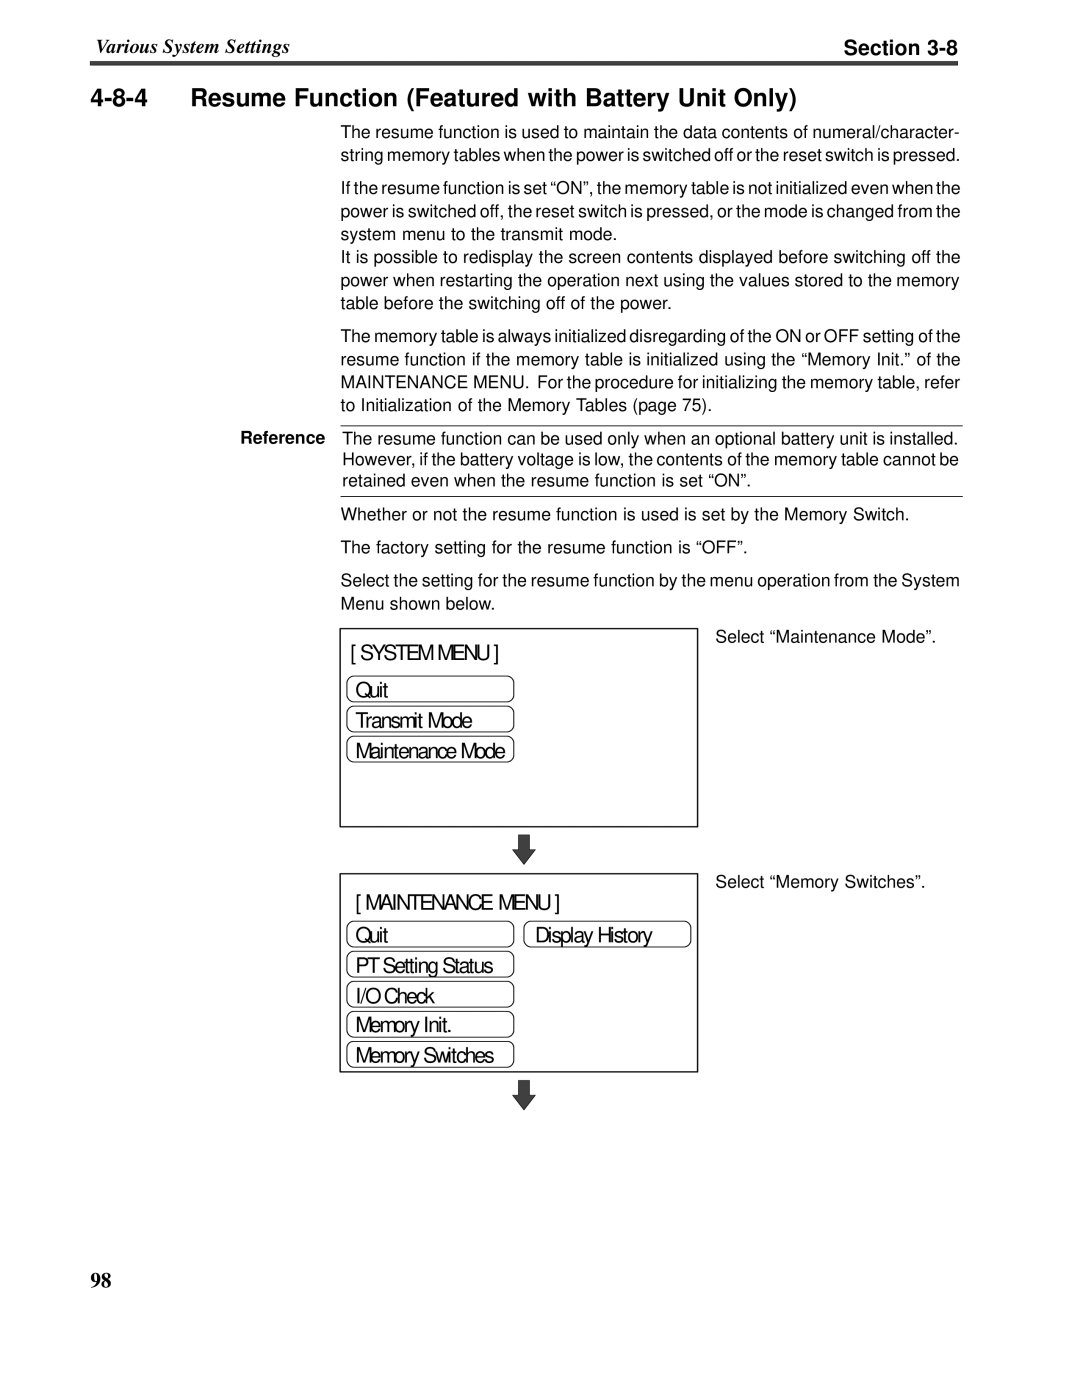 Omron V022-E3-1 operation manual Section, Menu shown below 